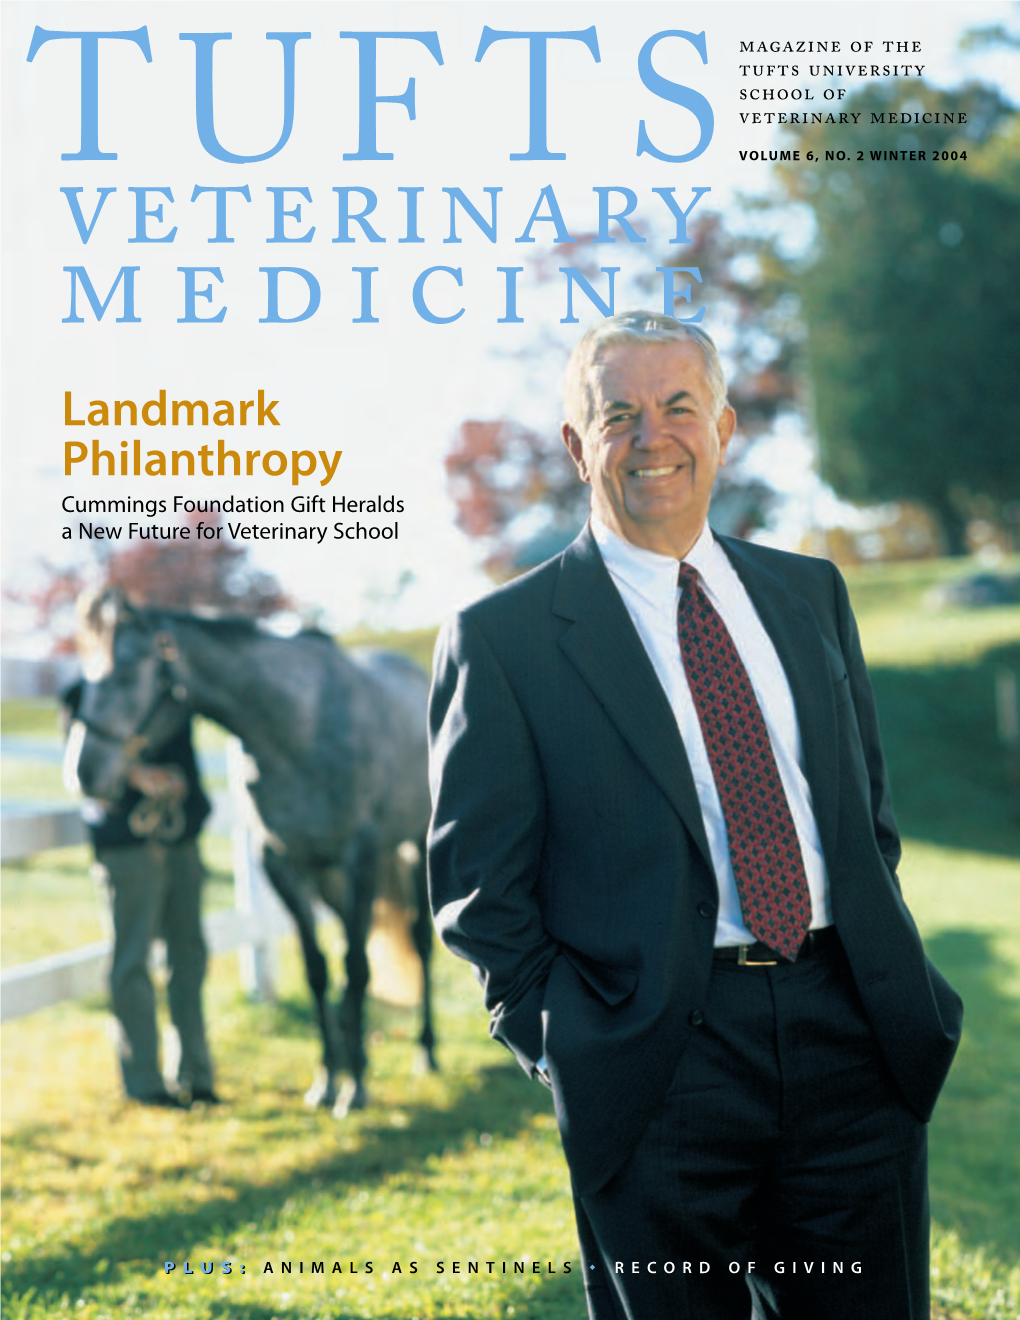 Landmark Philanthropy Cummings Foundation Gift Heralds a New Future for Veterinary School